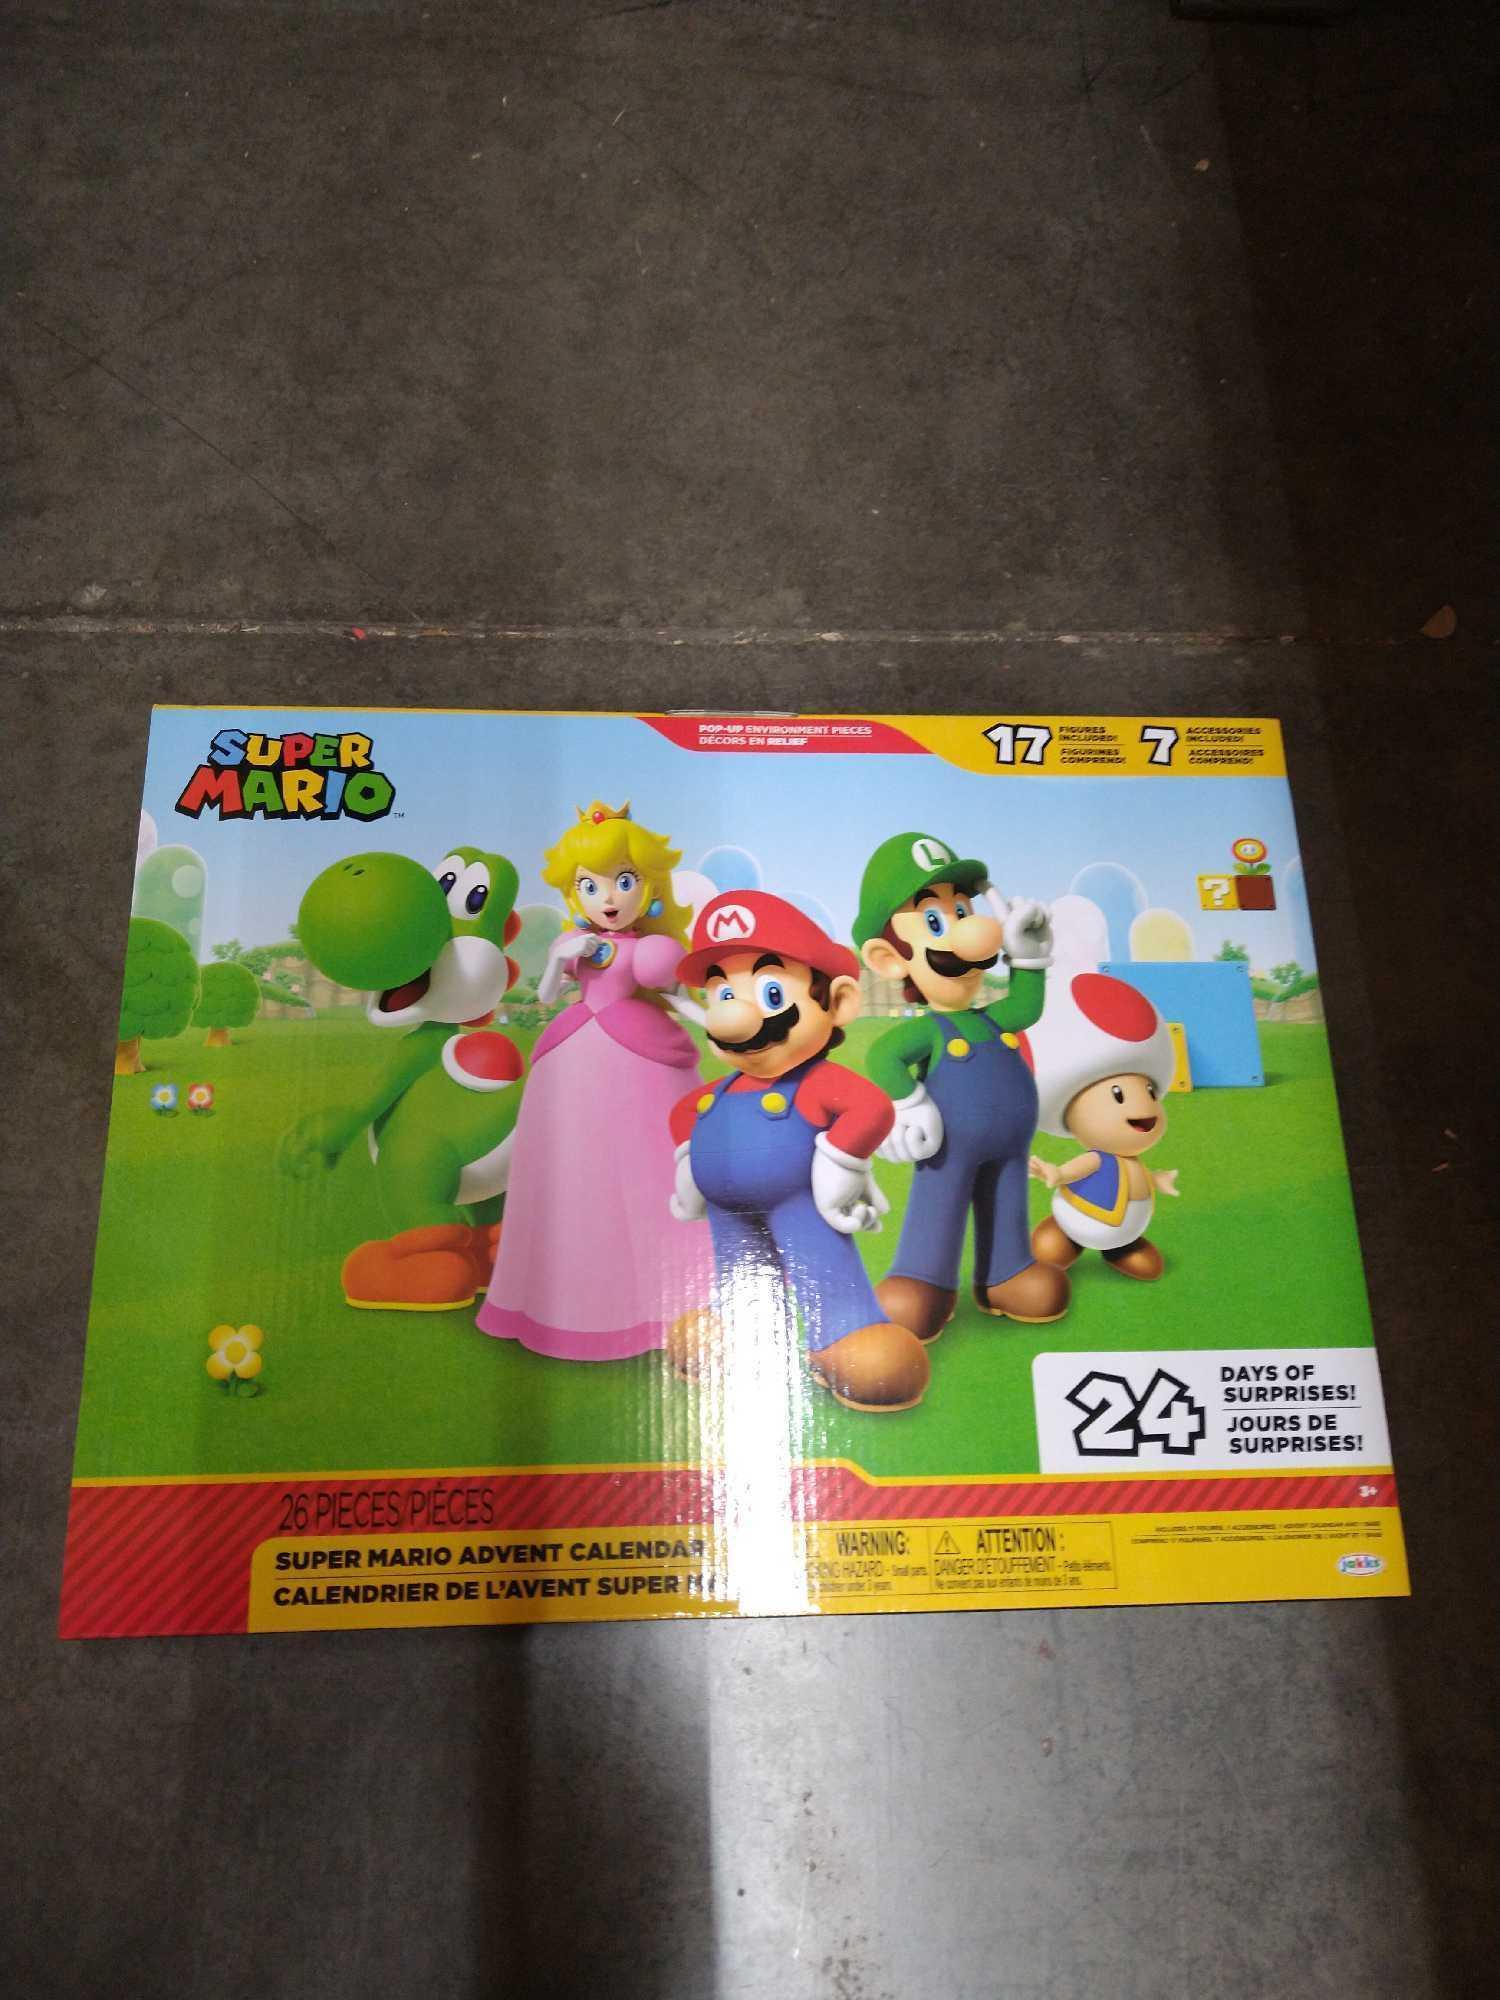 Super Mario Nintendo Advent Calendar Christmas Holiday Calendar [Amazon Exclusive], $44.58 MSRP